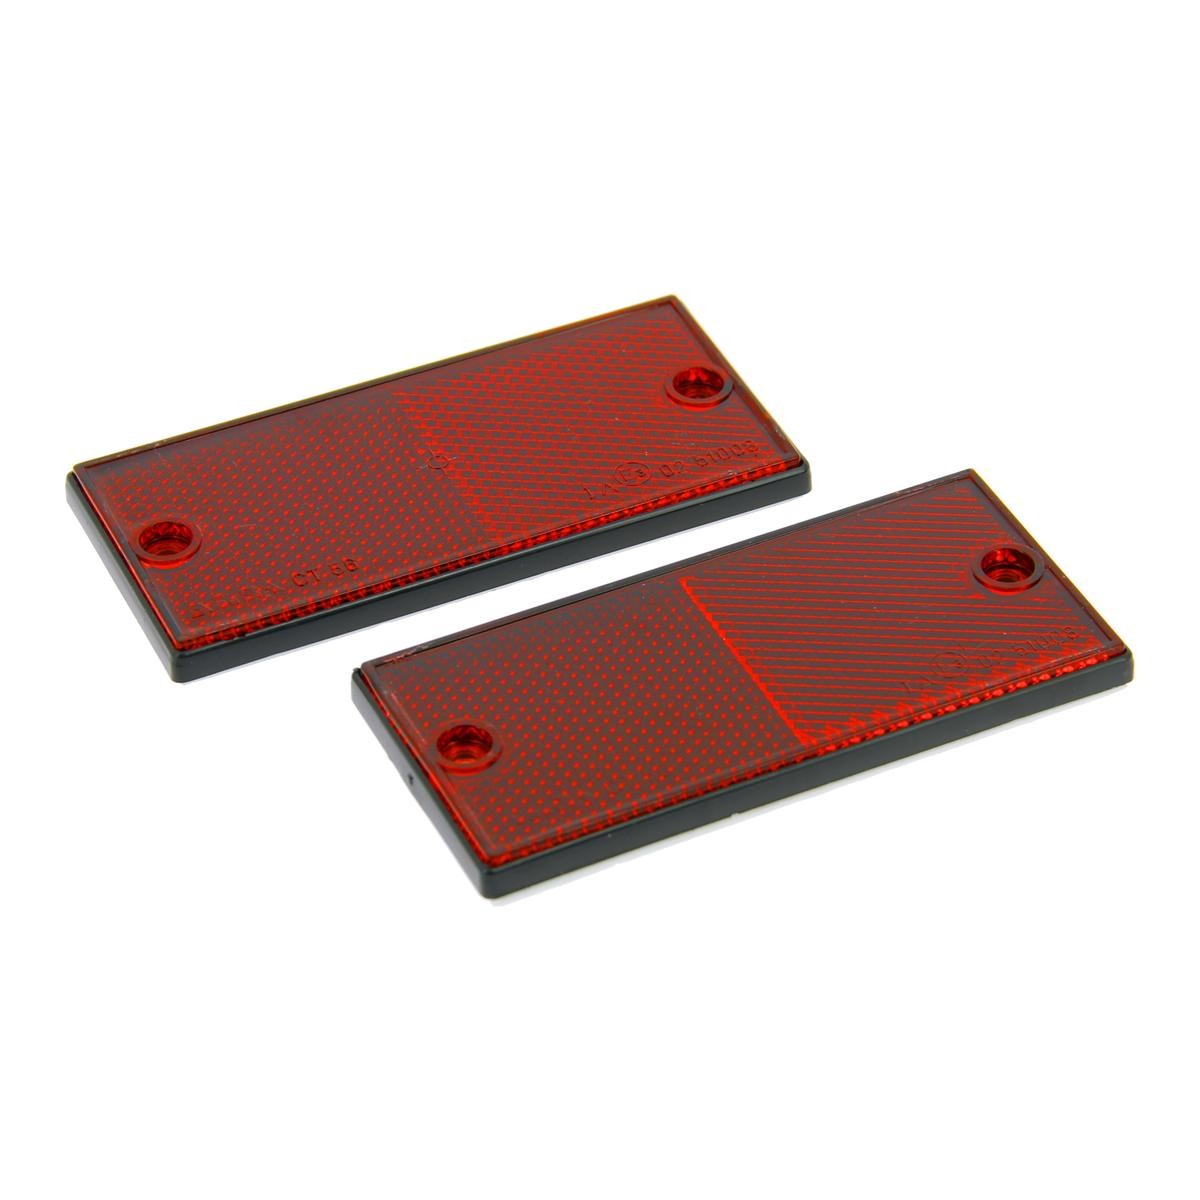 VESPA ET Rückstrahler Rot 50mm, mit Klebefolie, ohne Befestigungsmaterial XL 553919